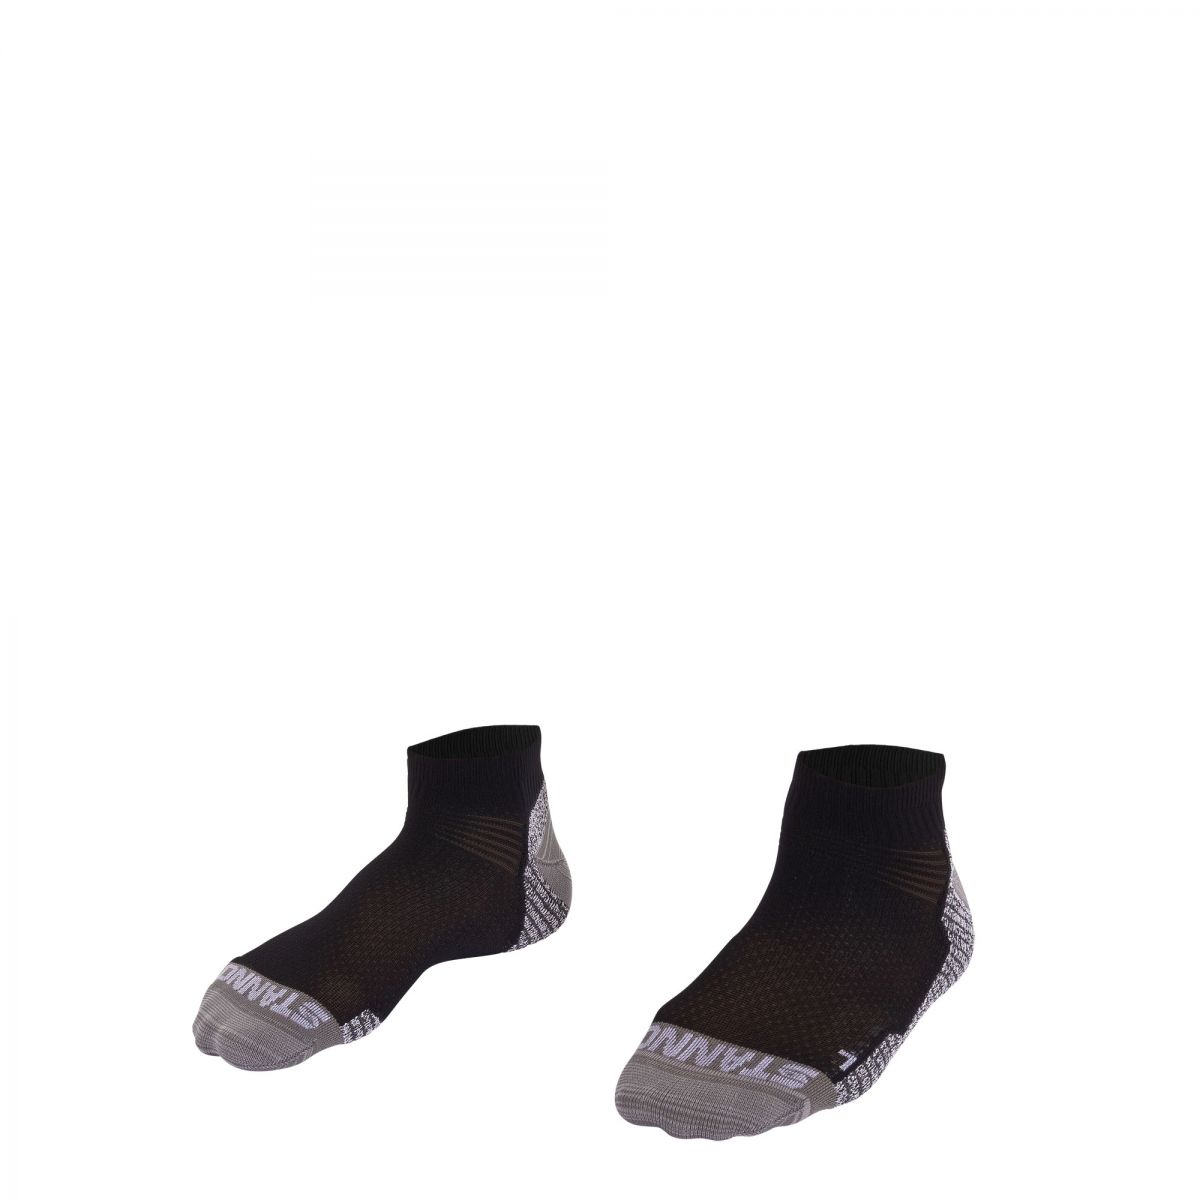 Prime Quarter Socks grip